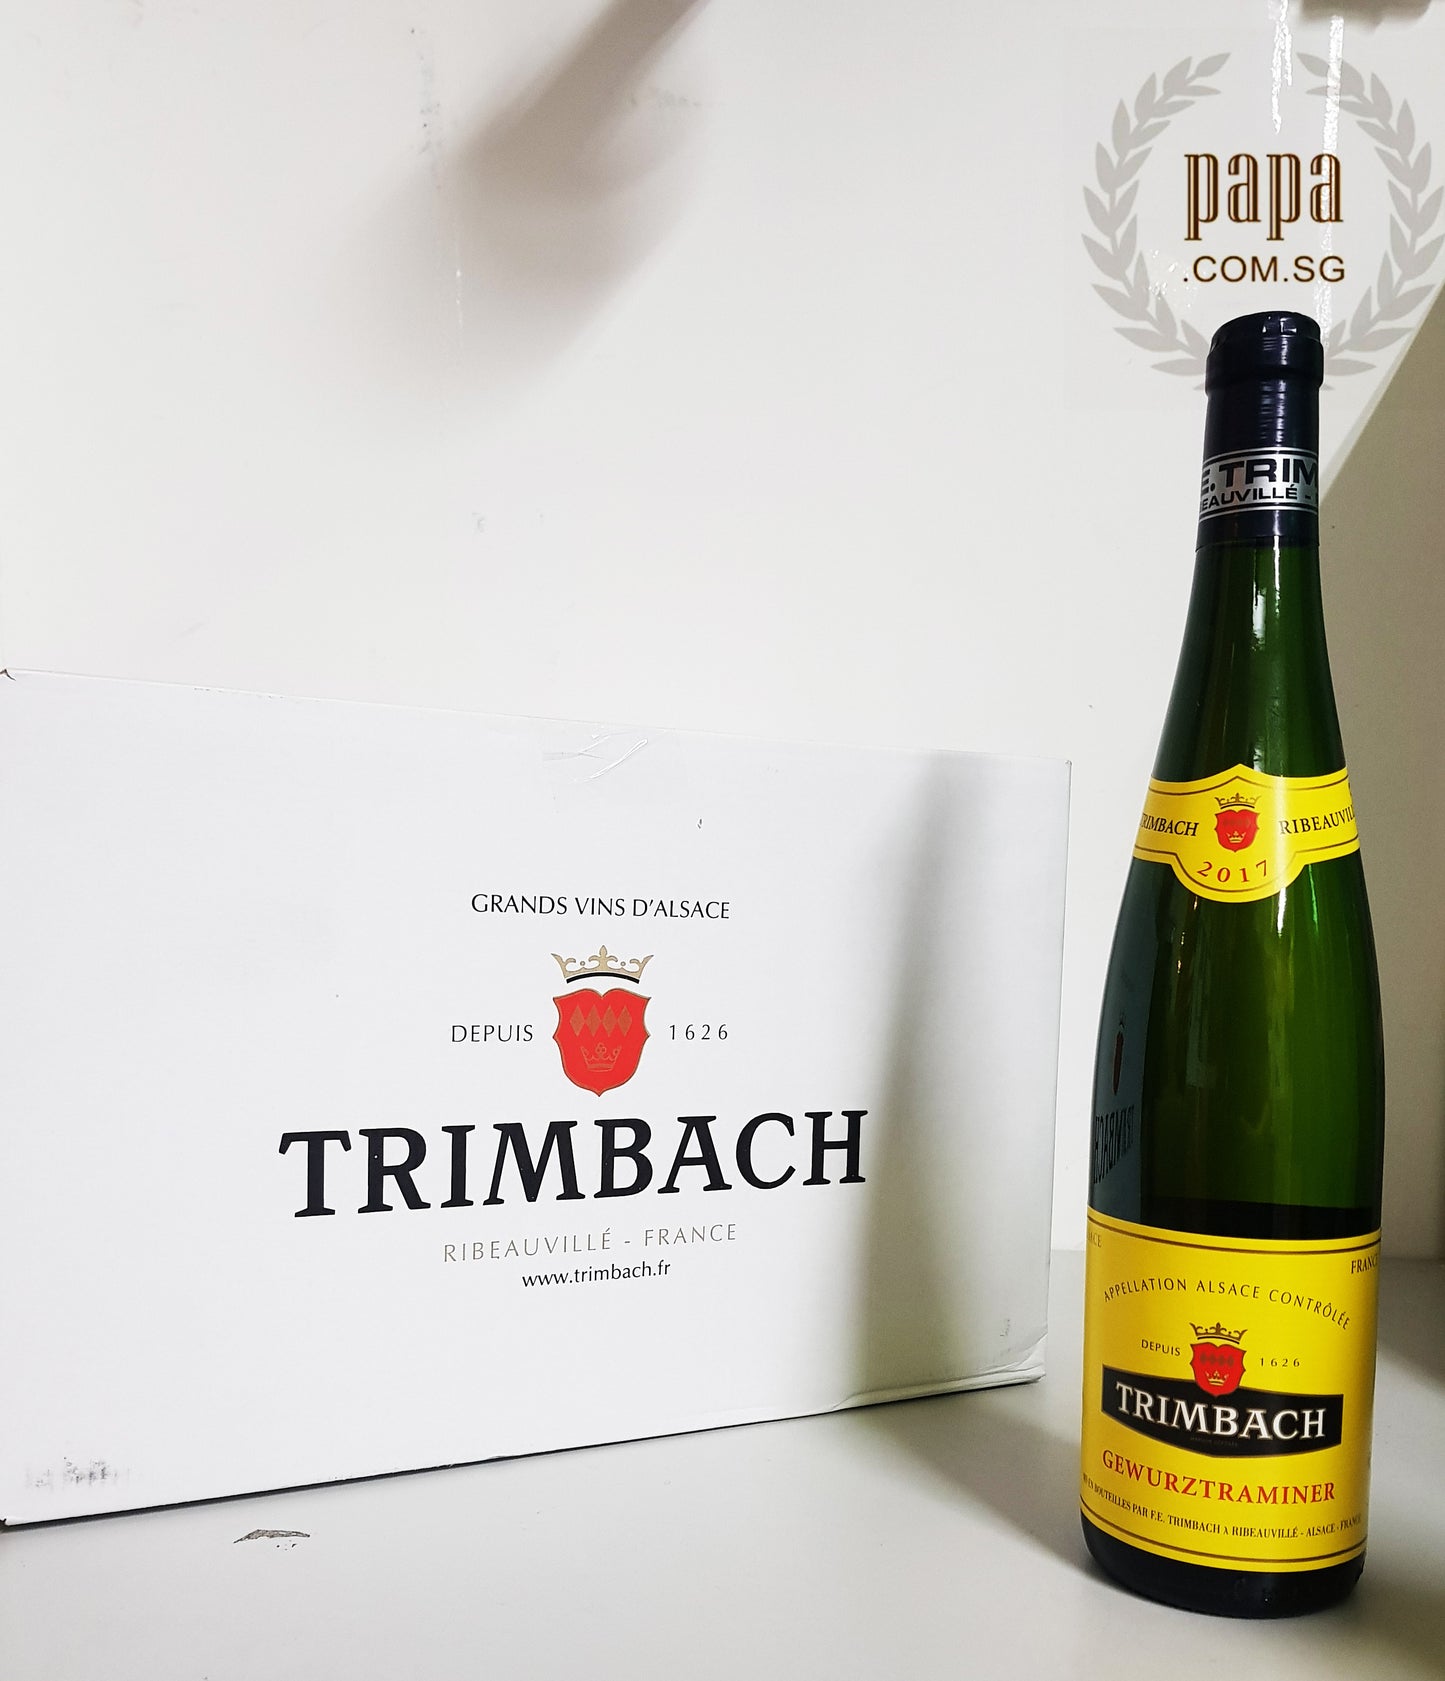 Trimbach Classic Gewurztraminer 2018